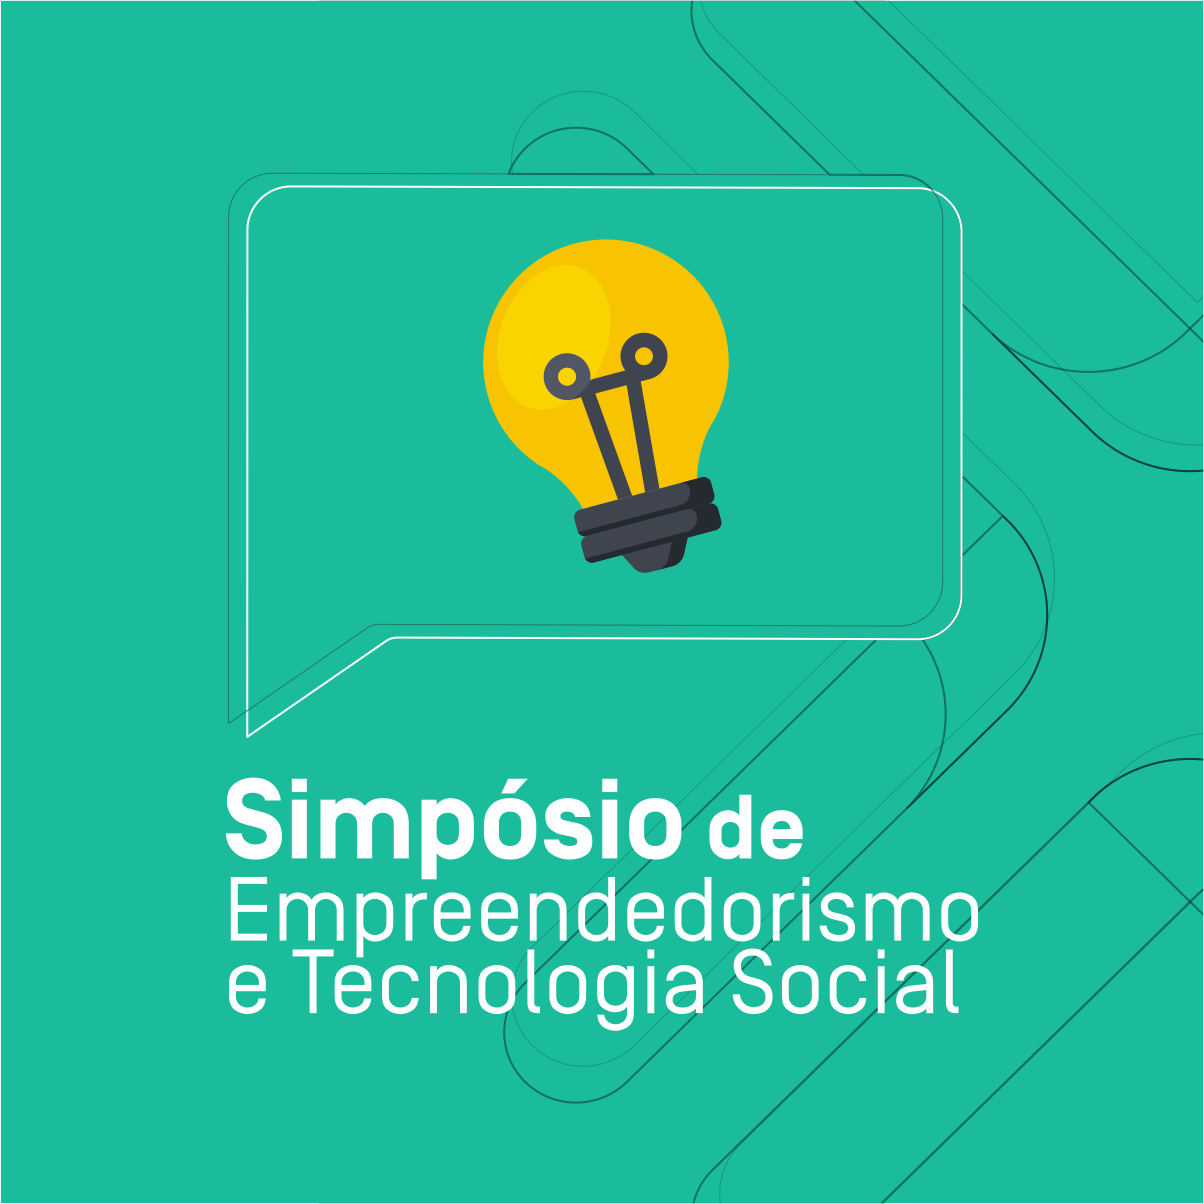 Simpósio de Empreendedorismo e Tecnologia Social começa nesta tarde, no Campus Boa Vista